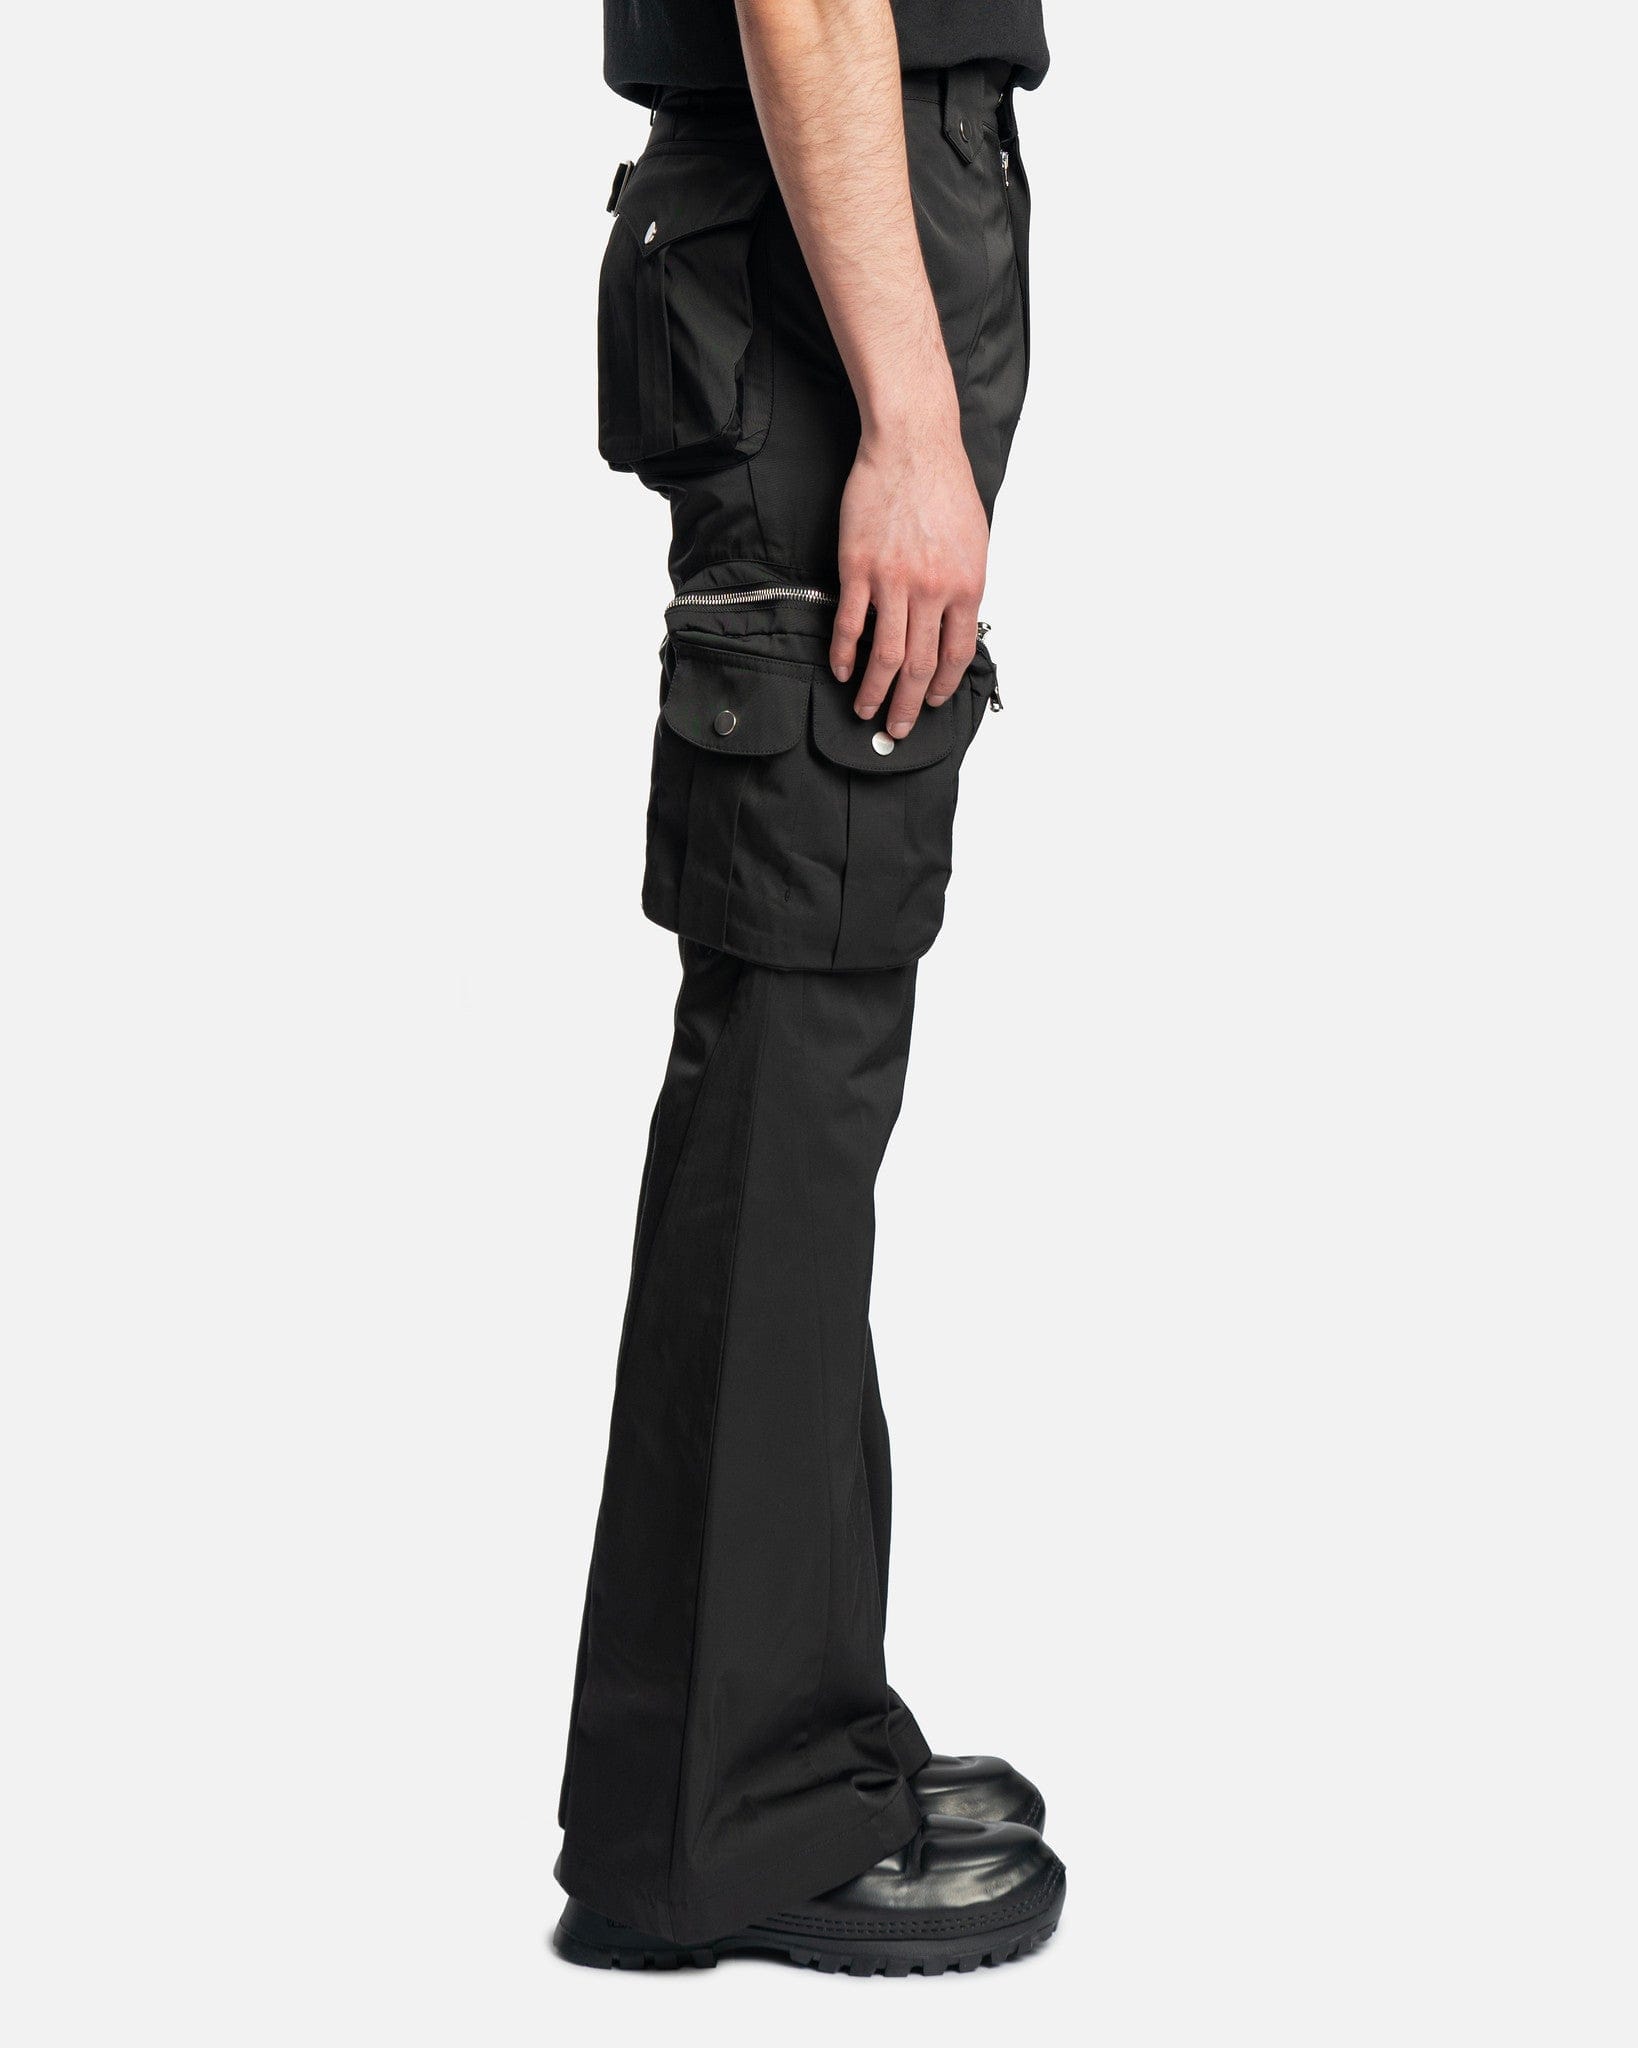 FFFPOSTALSERVICE Zip Trouser Black パンツ - ワークパンツ/カーゴパンツ